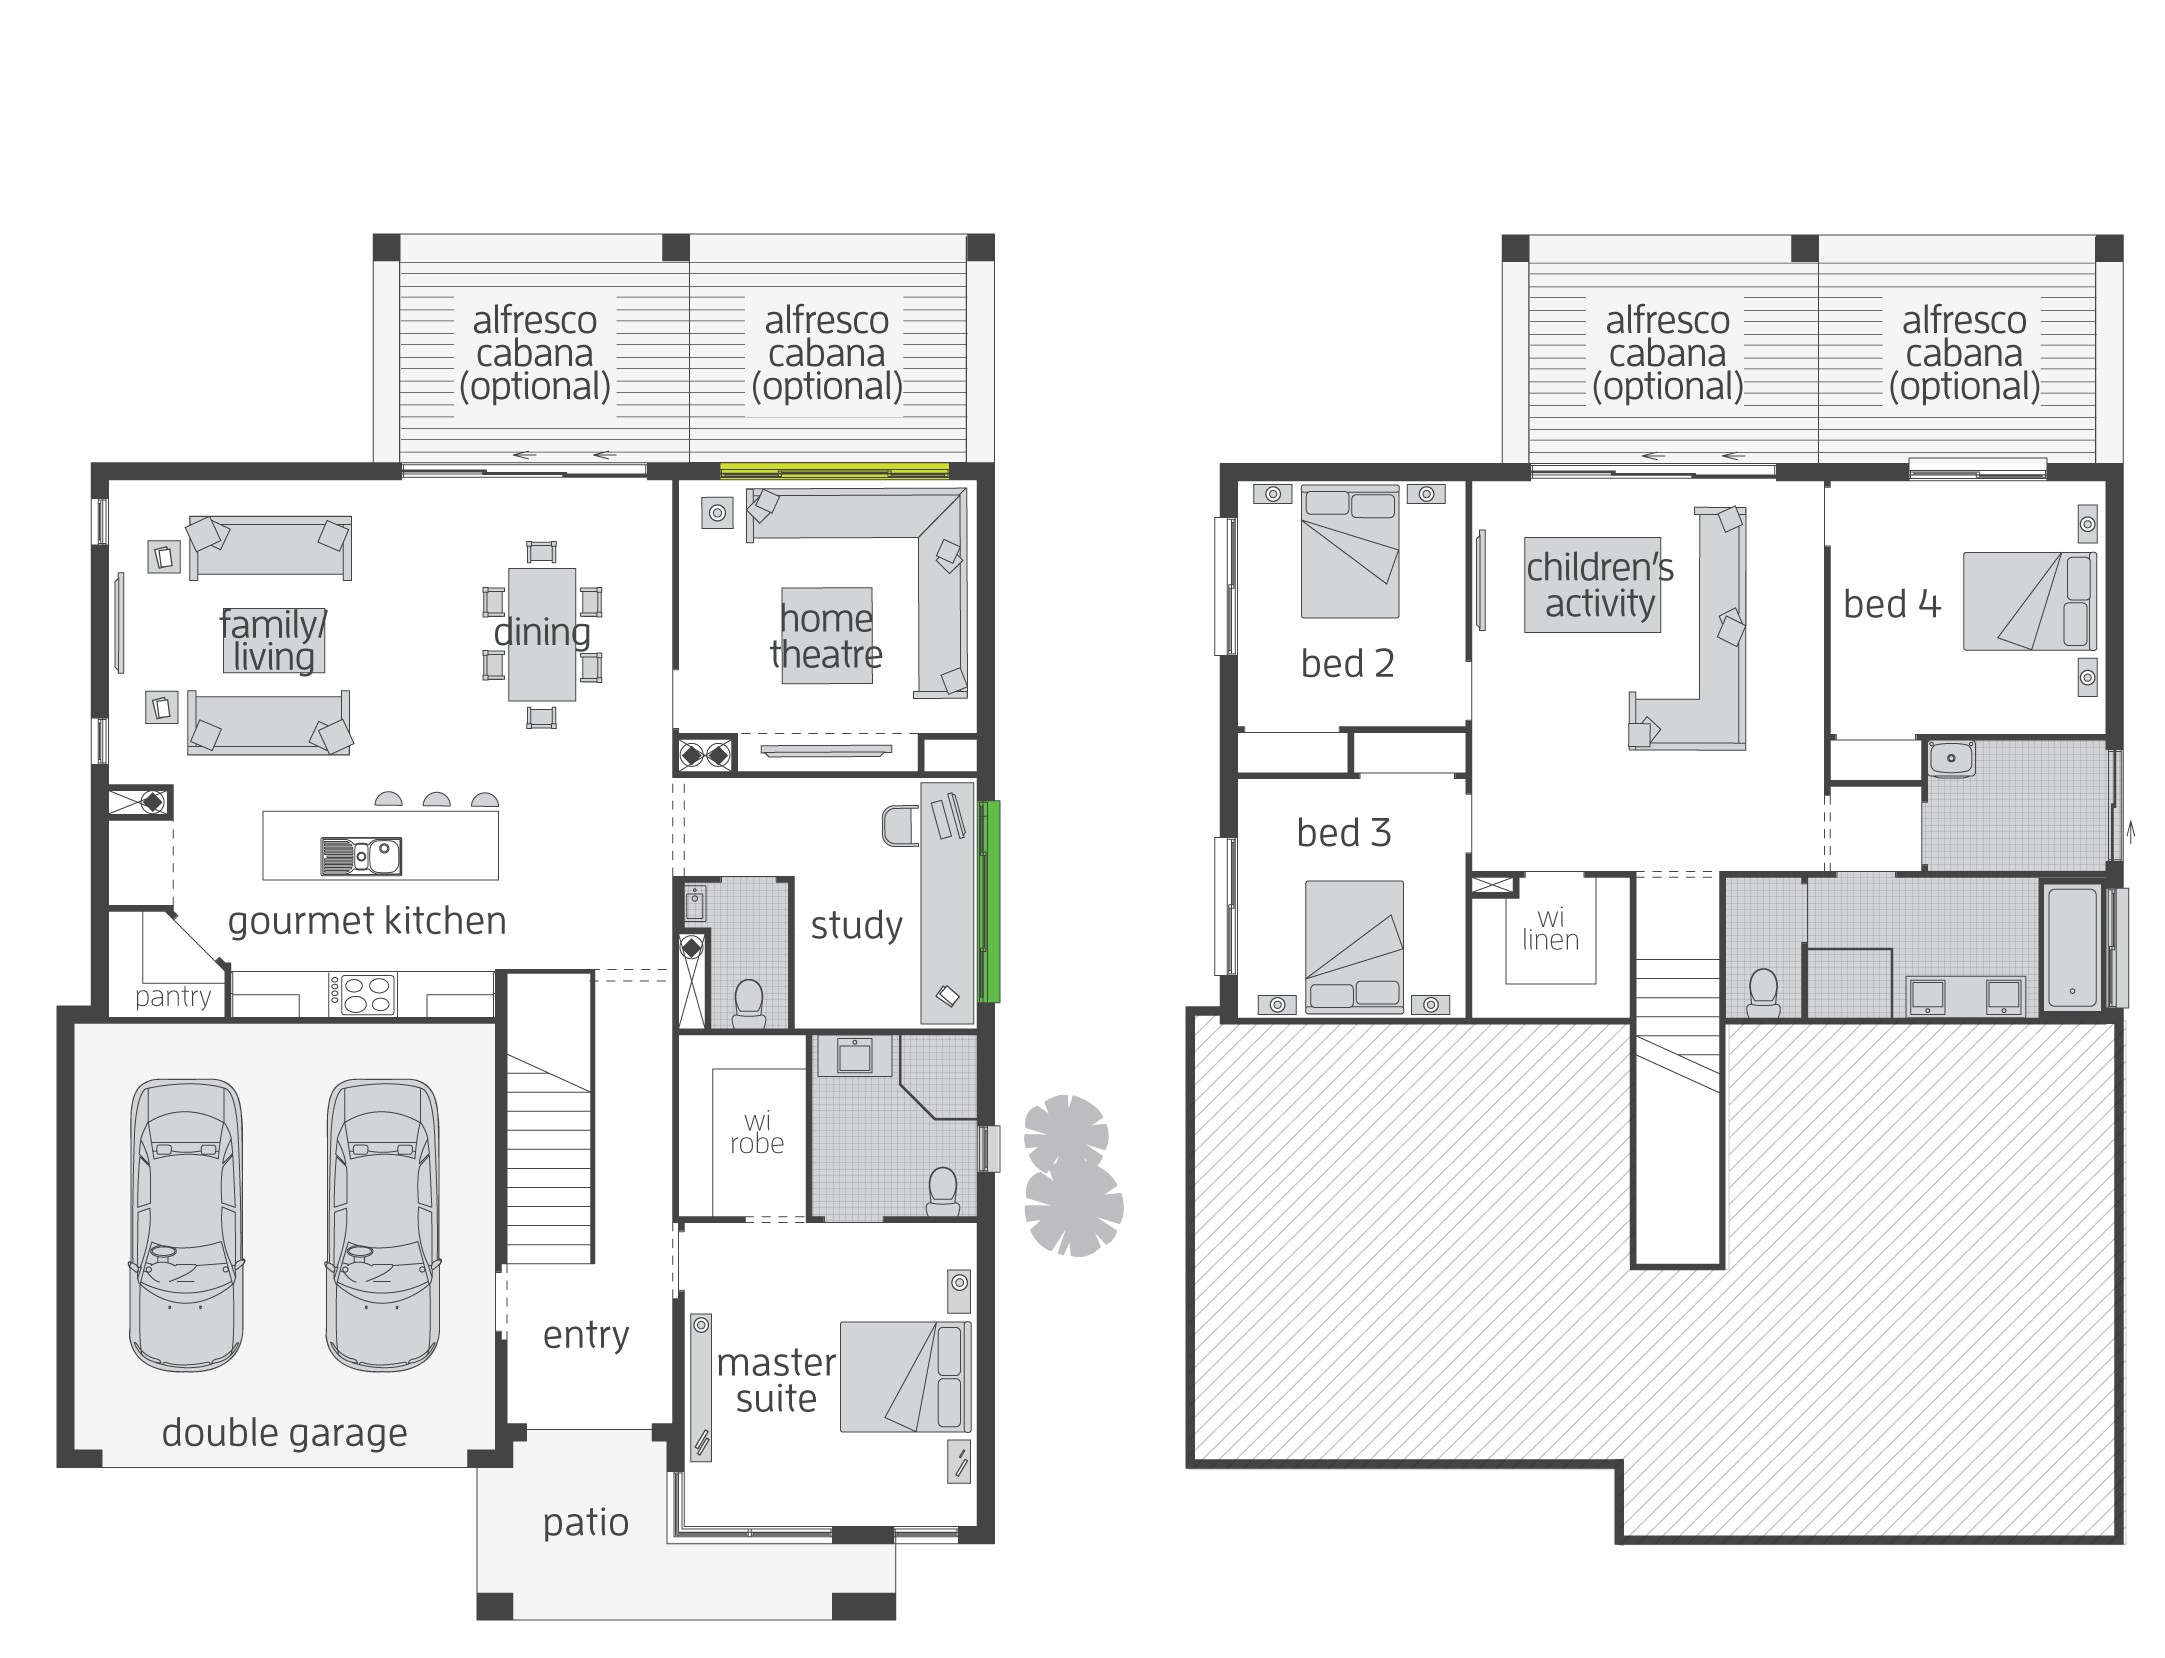 Split Level Home Plans the Horizon Split Level Floor Plan by Mcdonald Jones